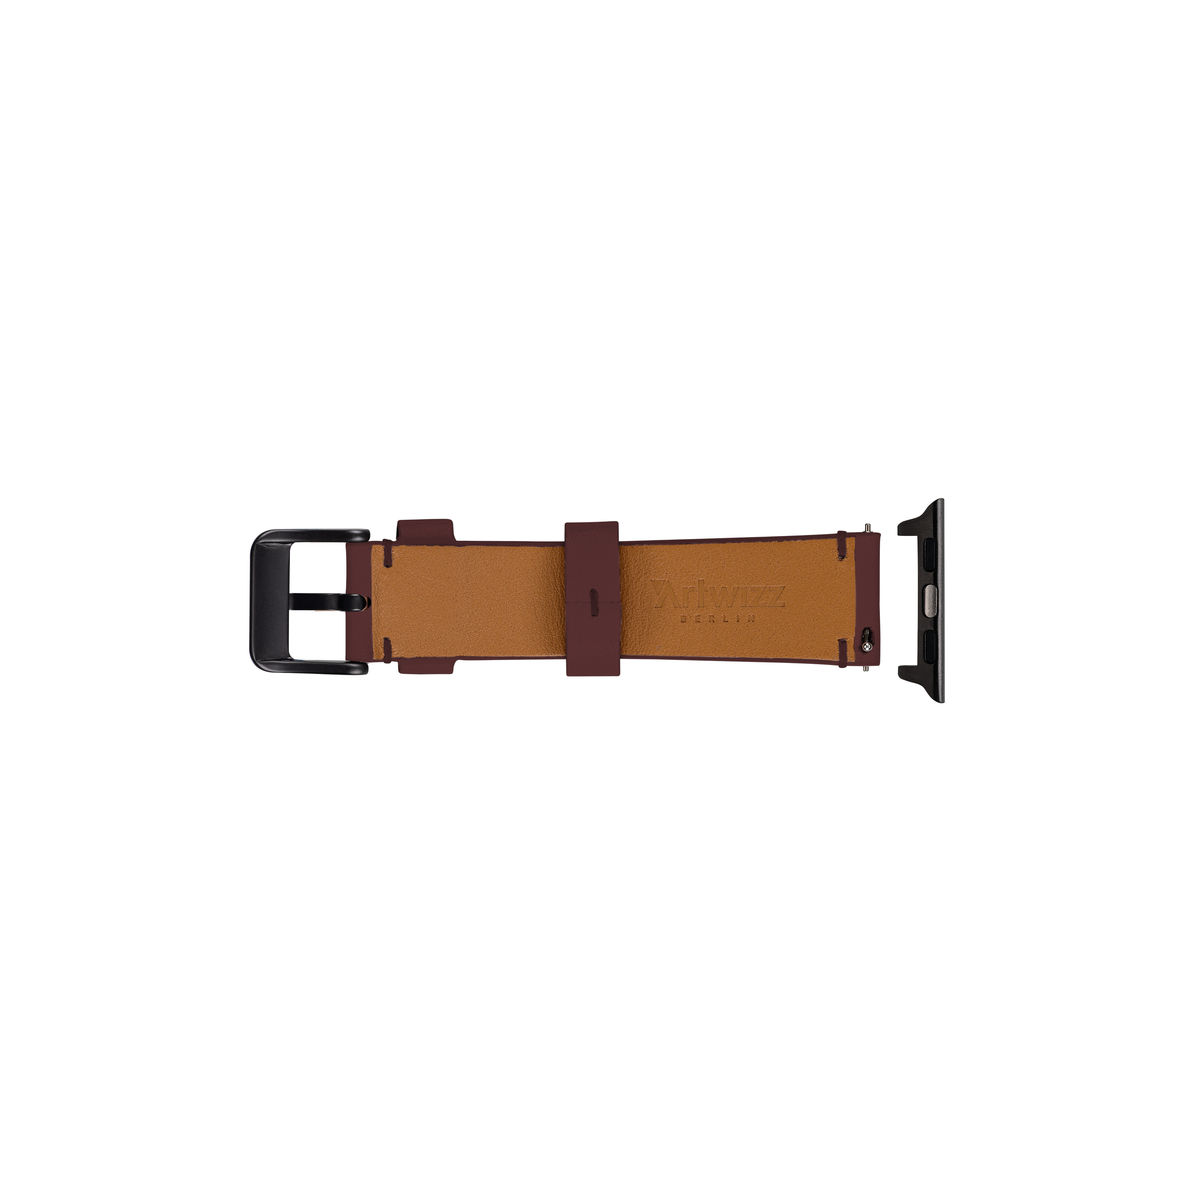 ARTWIZZ WatchBand Leather, Smartband, SE (38mm), 6-4 (41mm), & Watch 9-7 Series Apple (40mm), Braun Apple, 3-1